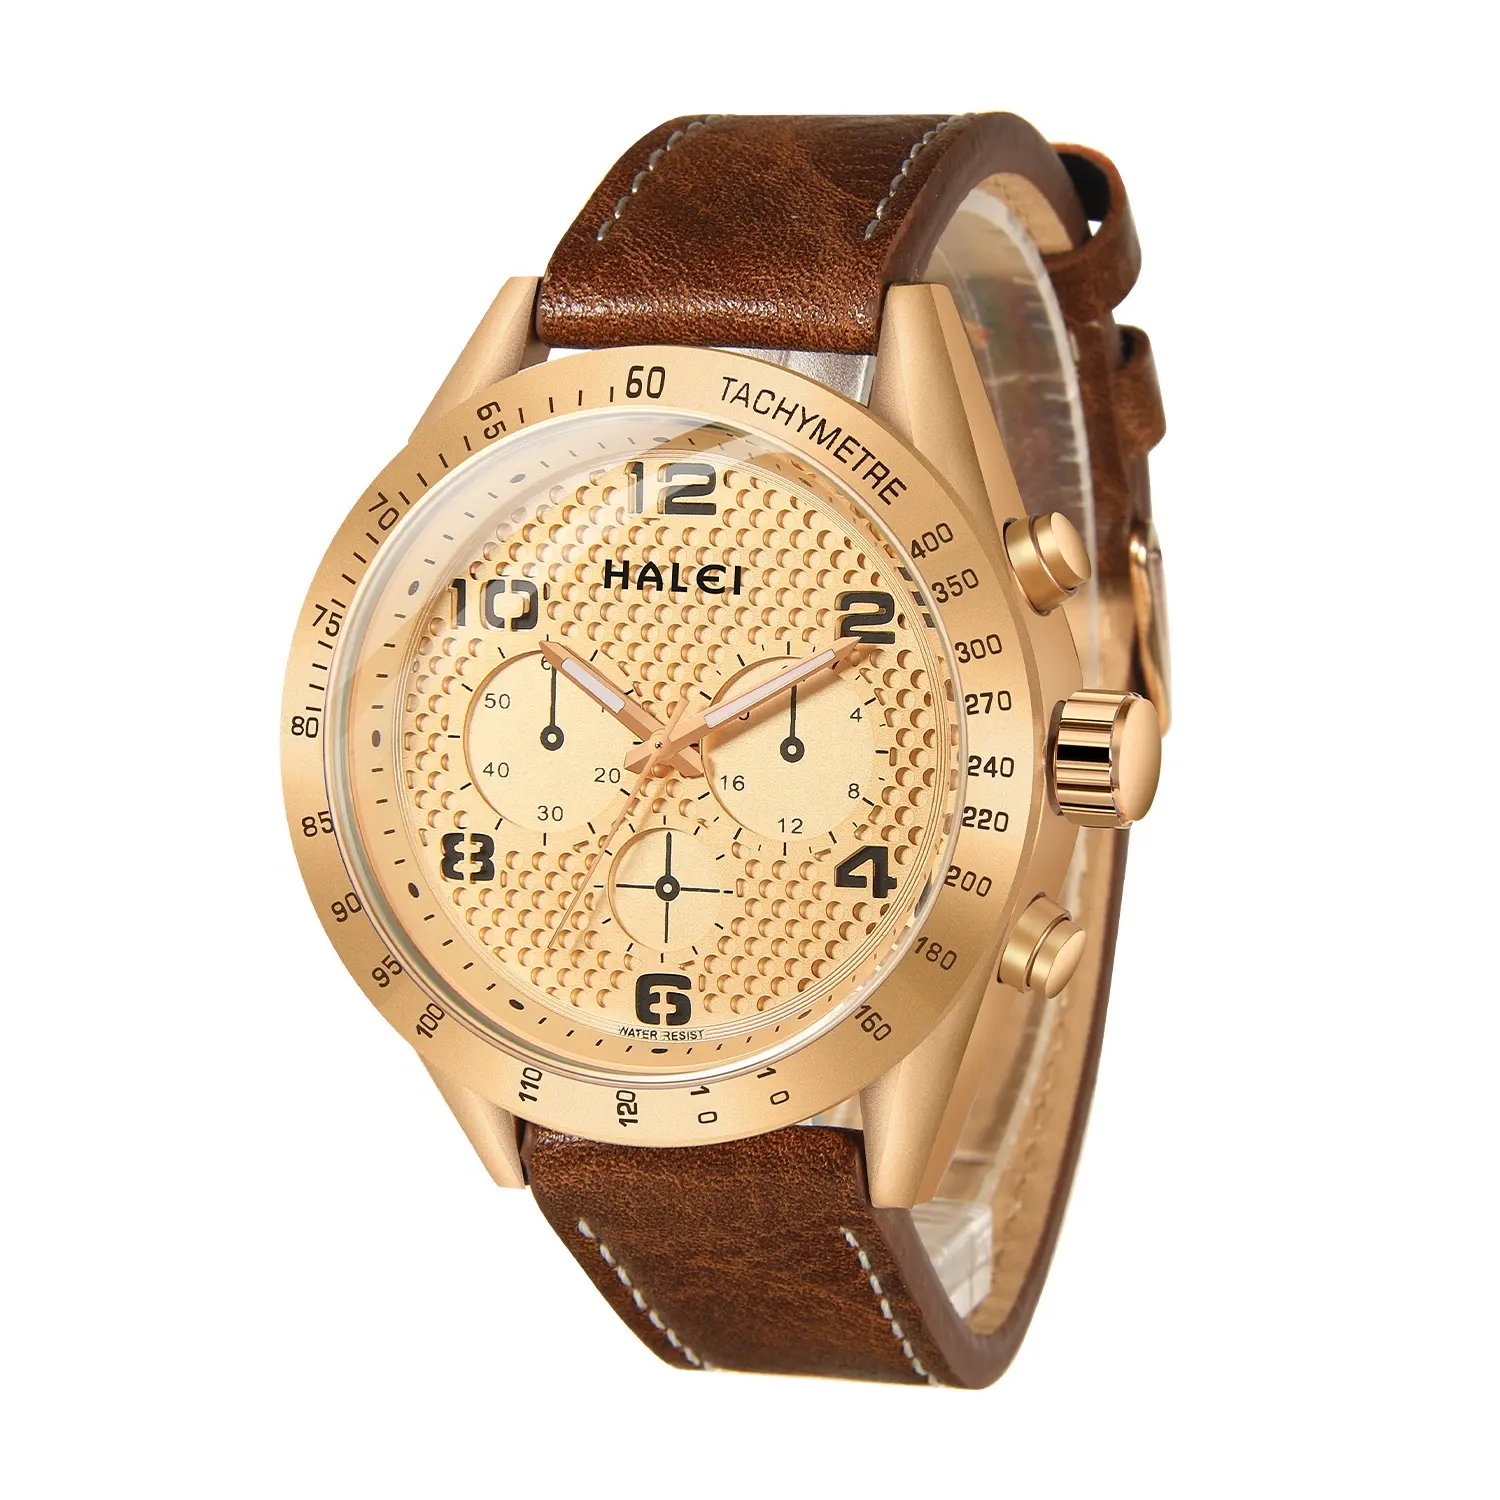 STAR RUDDER OEM leather wrist watch set,stainless steel premium watch for couple,Multi-function men quartz watch